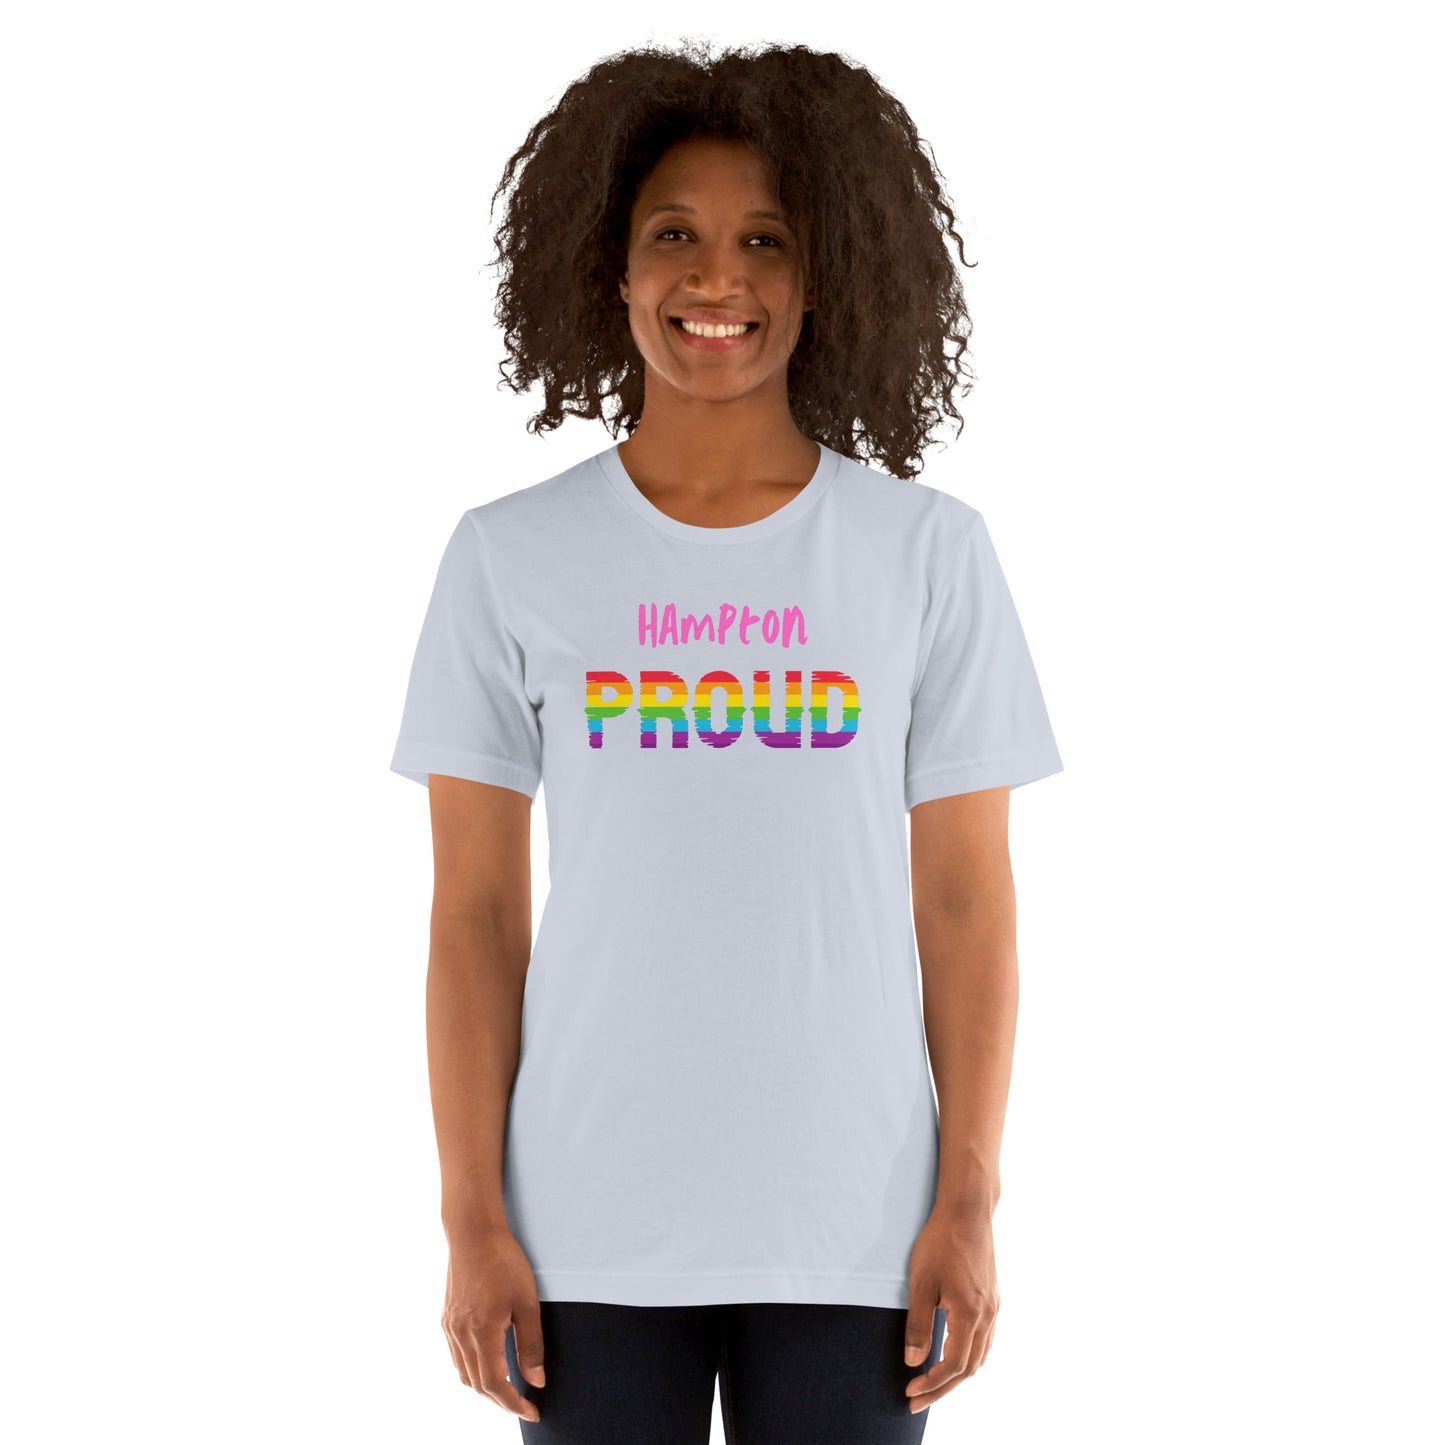 "Hampton Proud" unisex t-shirt